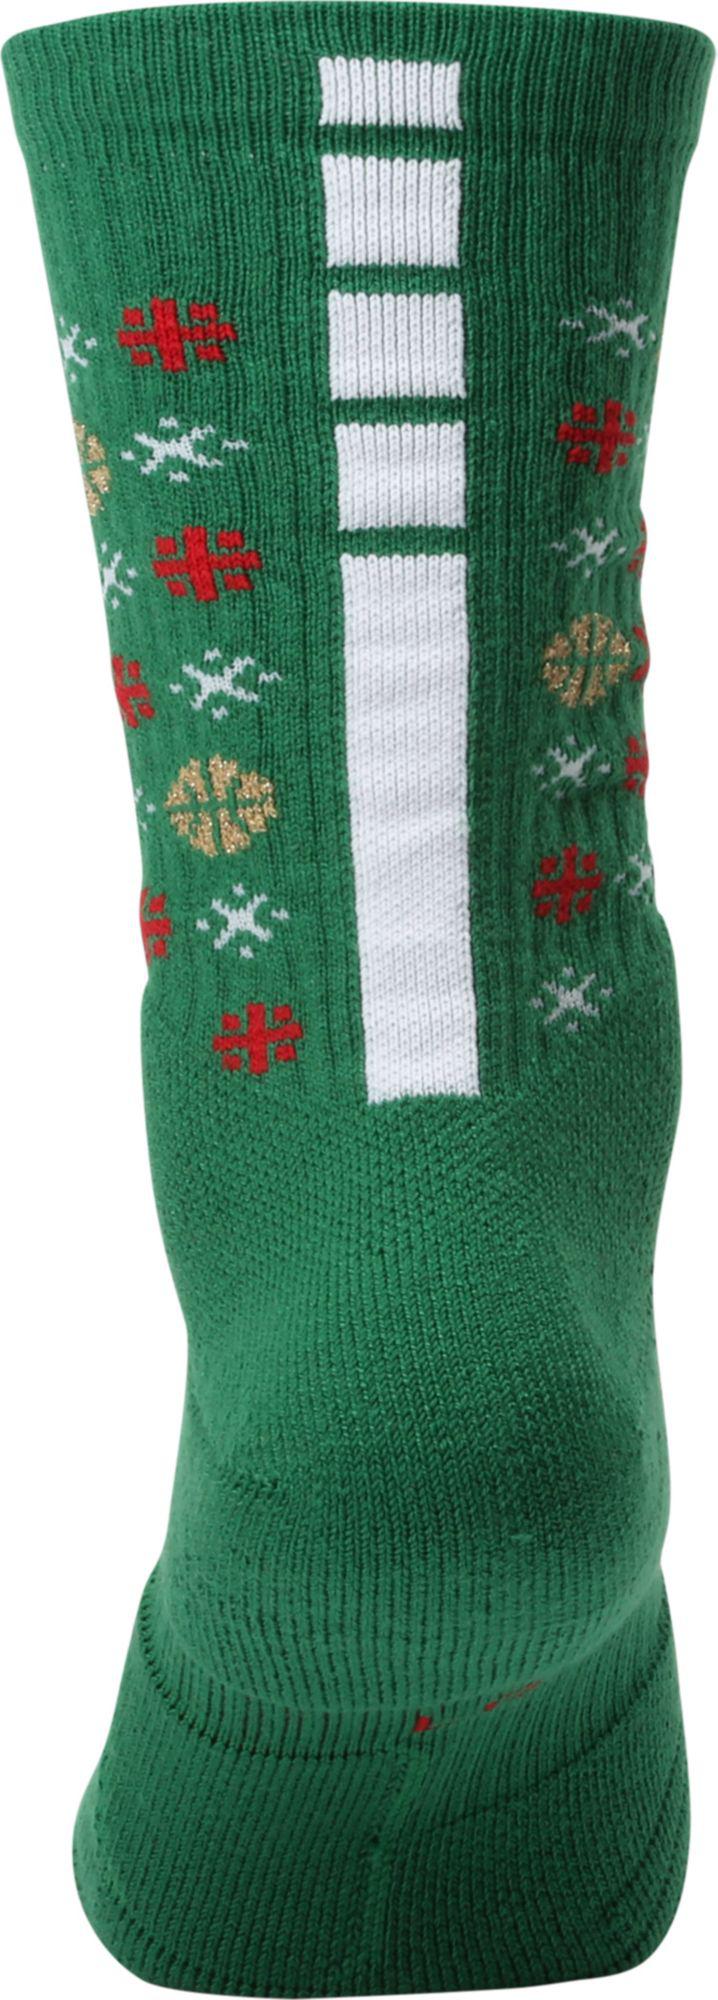 green nike basketball socks